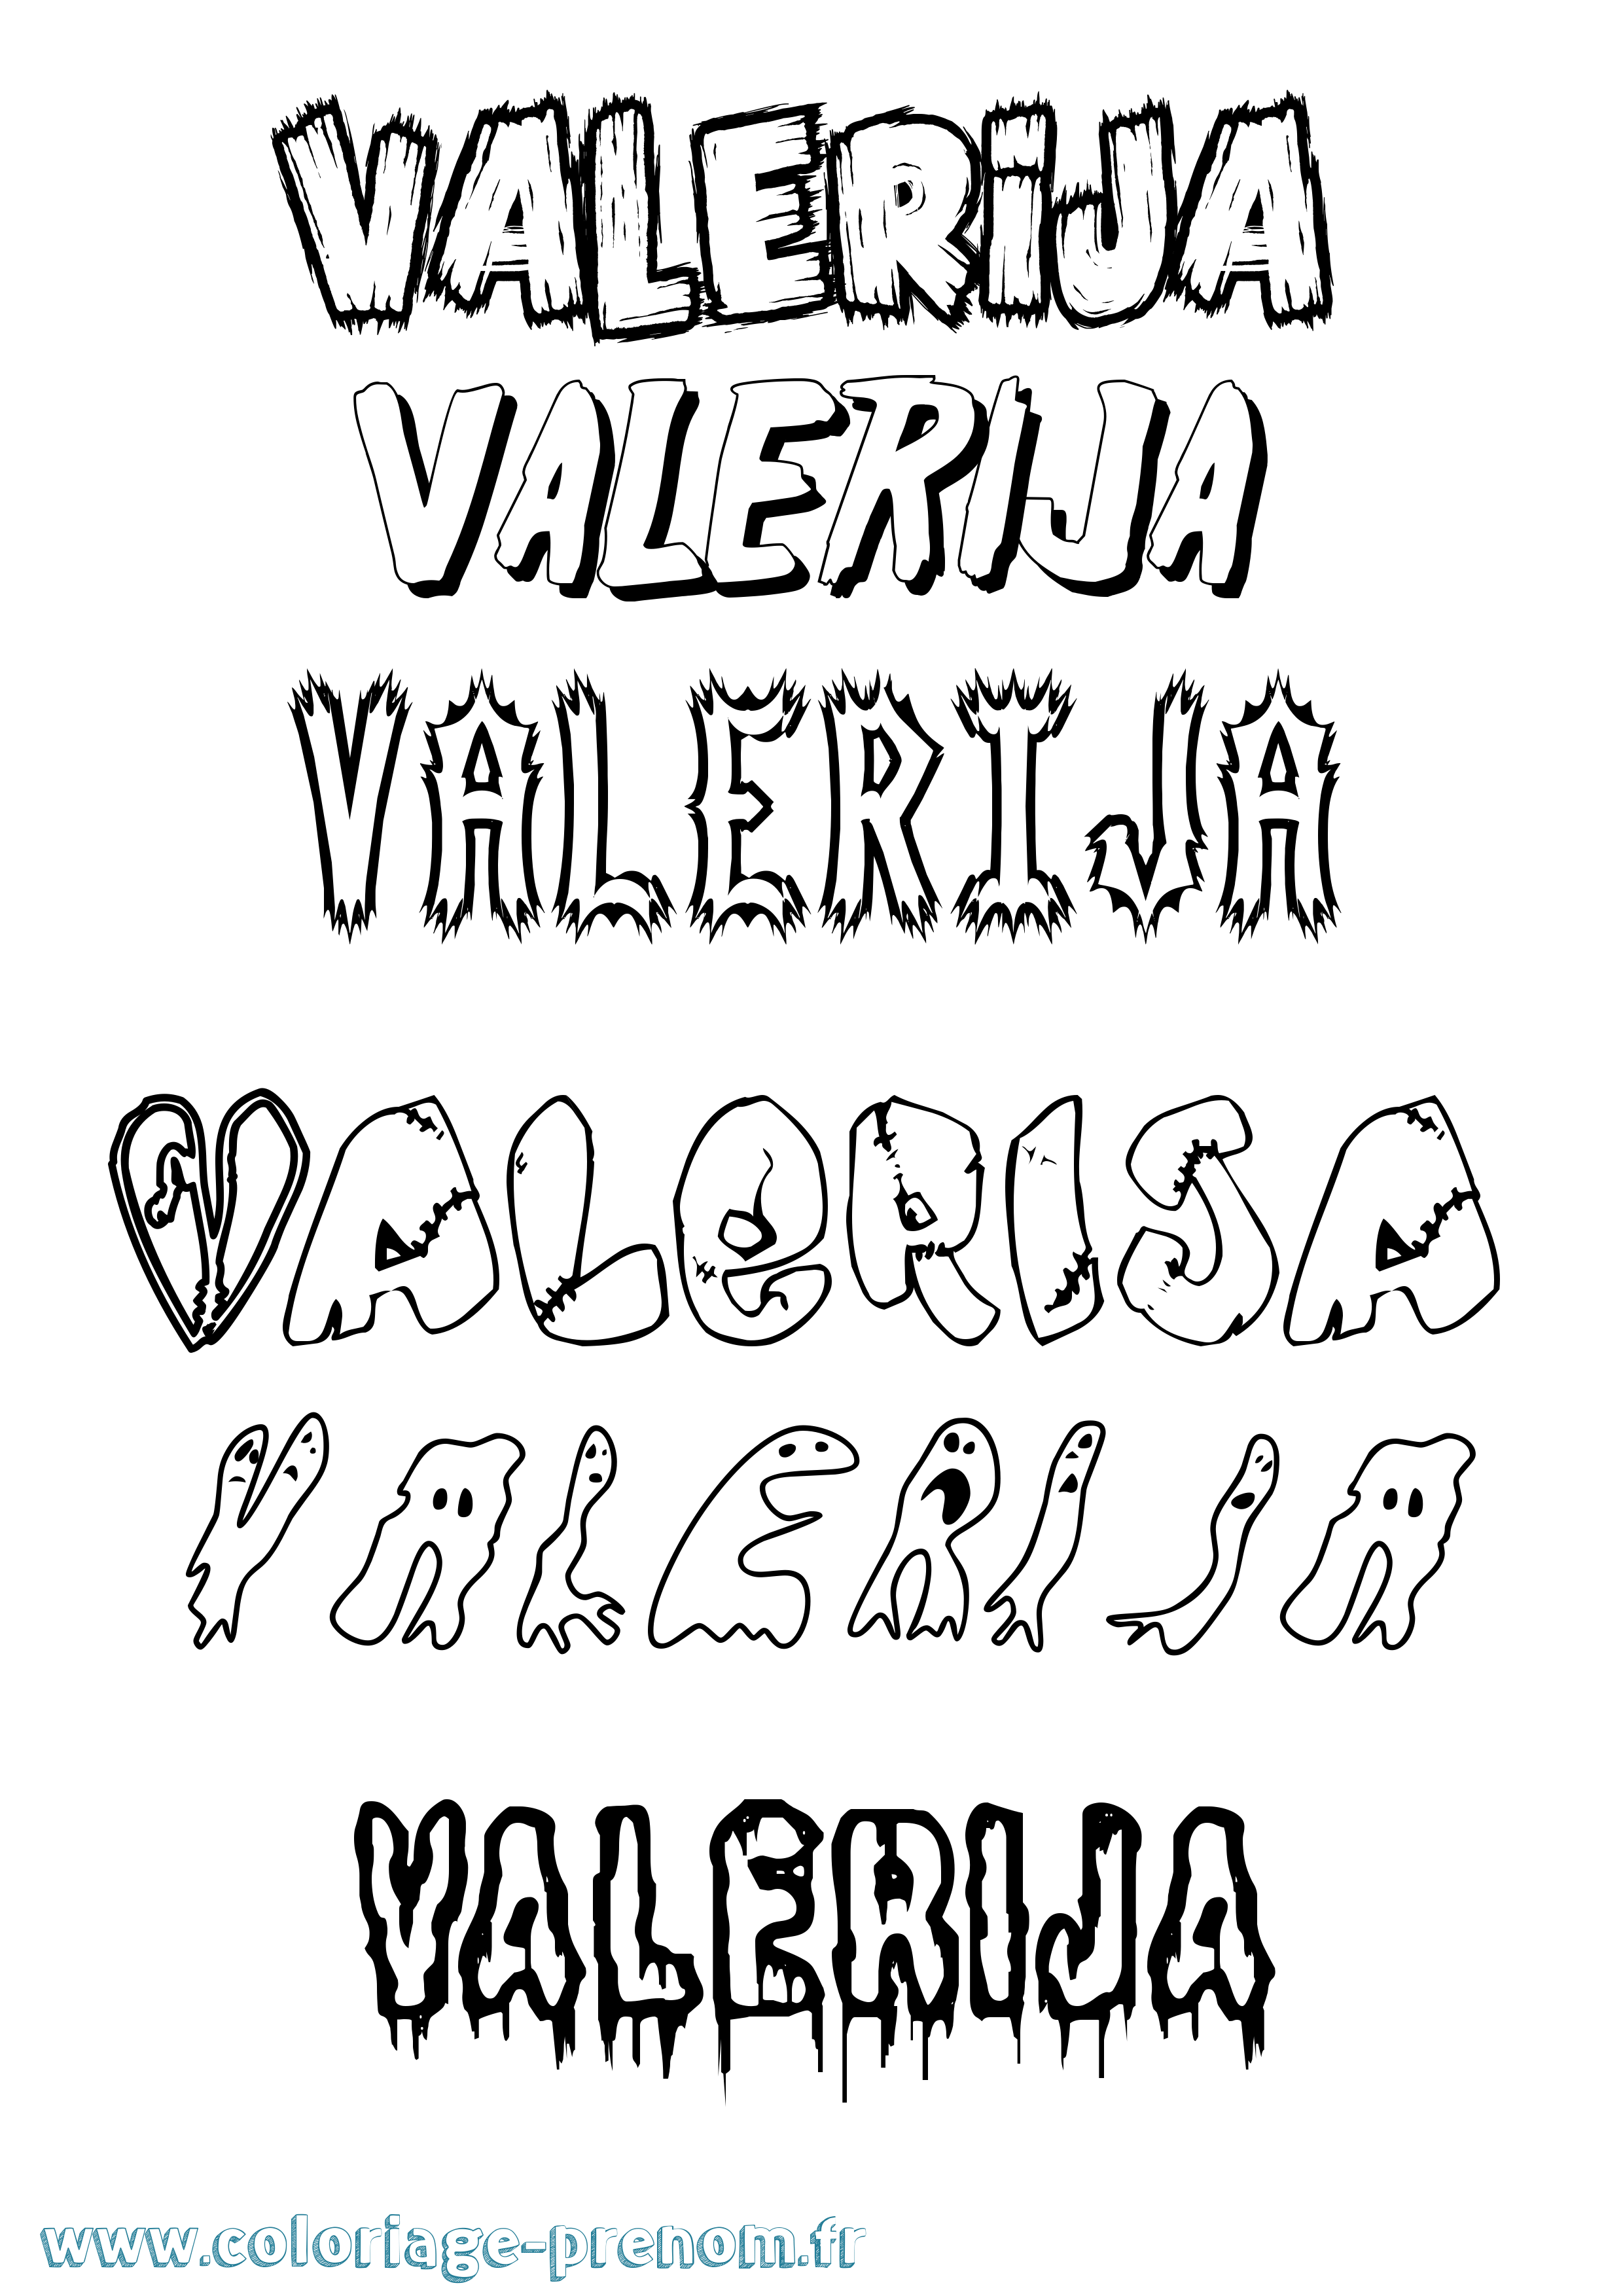 Coloriage prénom Valerija Frisson